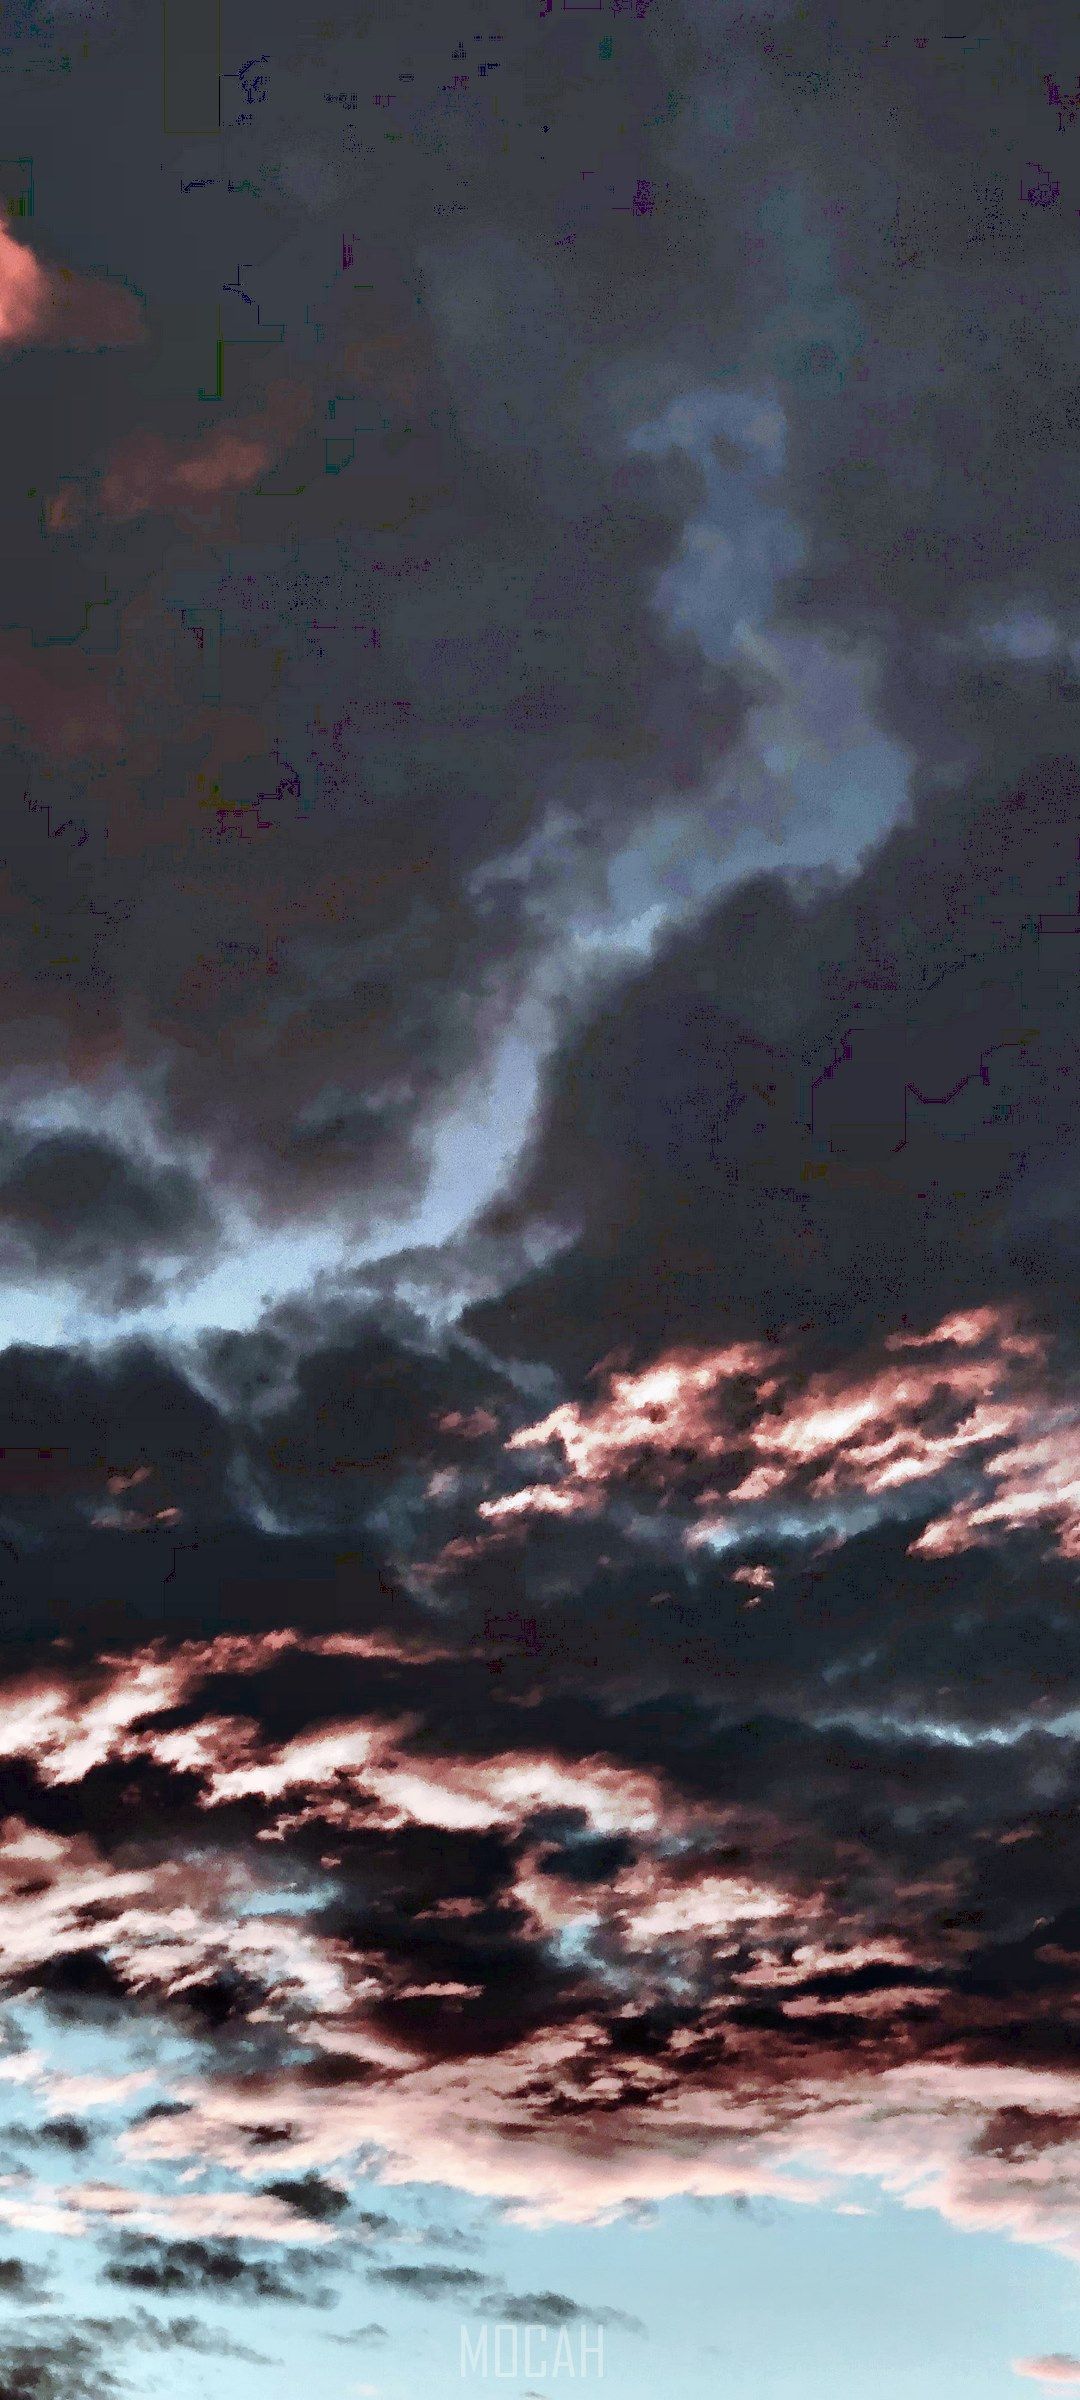 cloudy hello, Oppo Reno4 Pro 5G wallpaper download, 1080x2400 Gallery HD Wallpaper